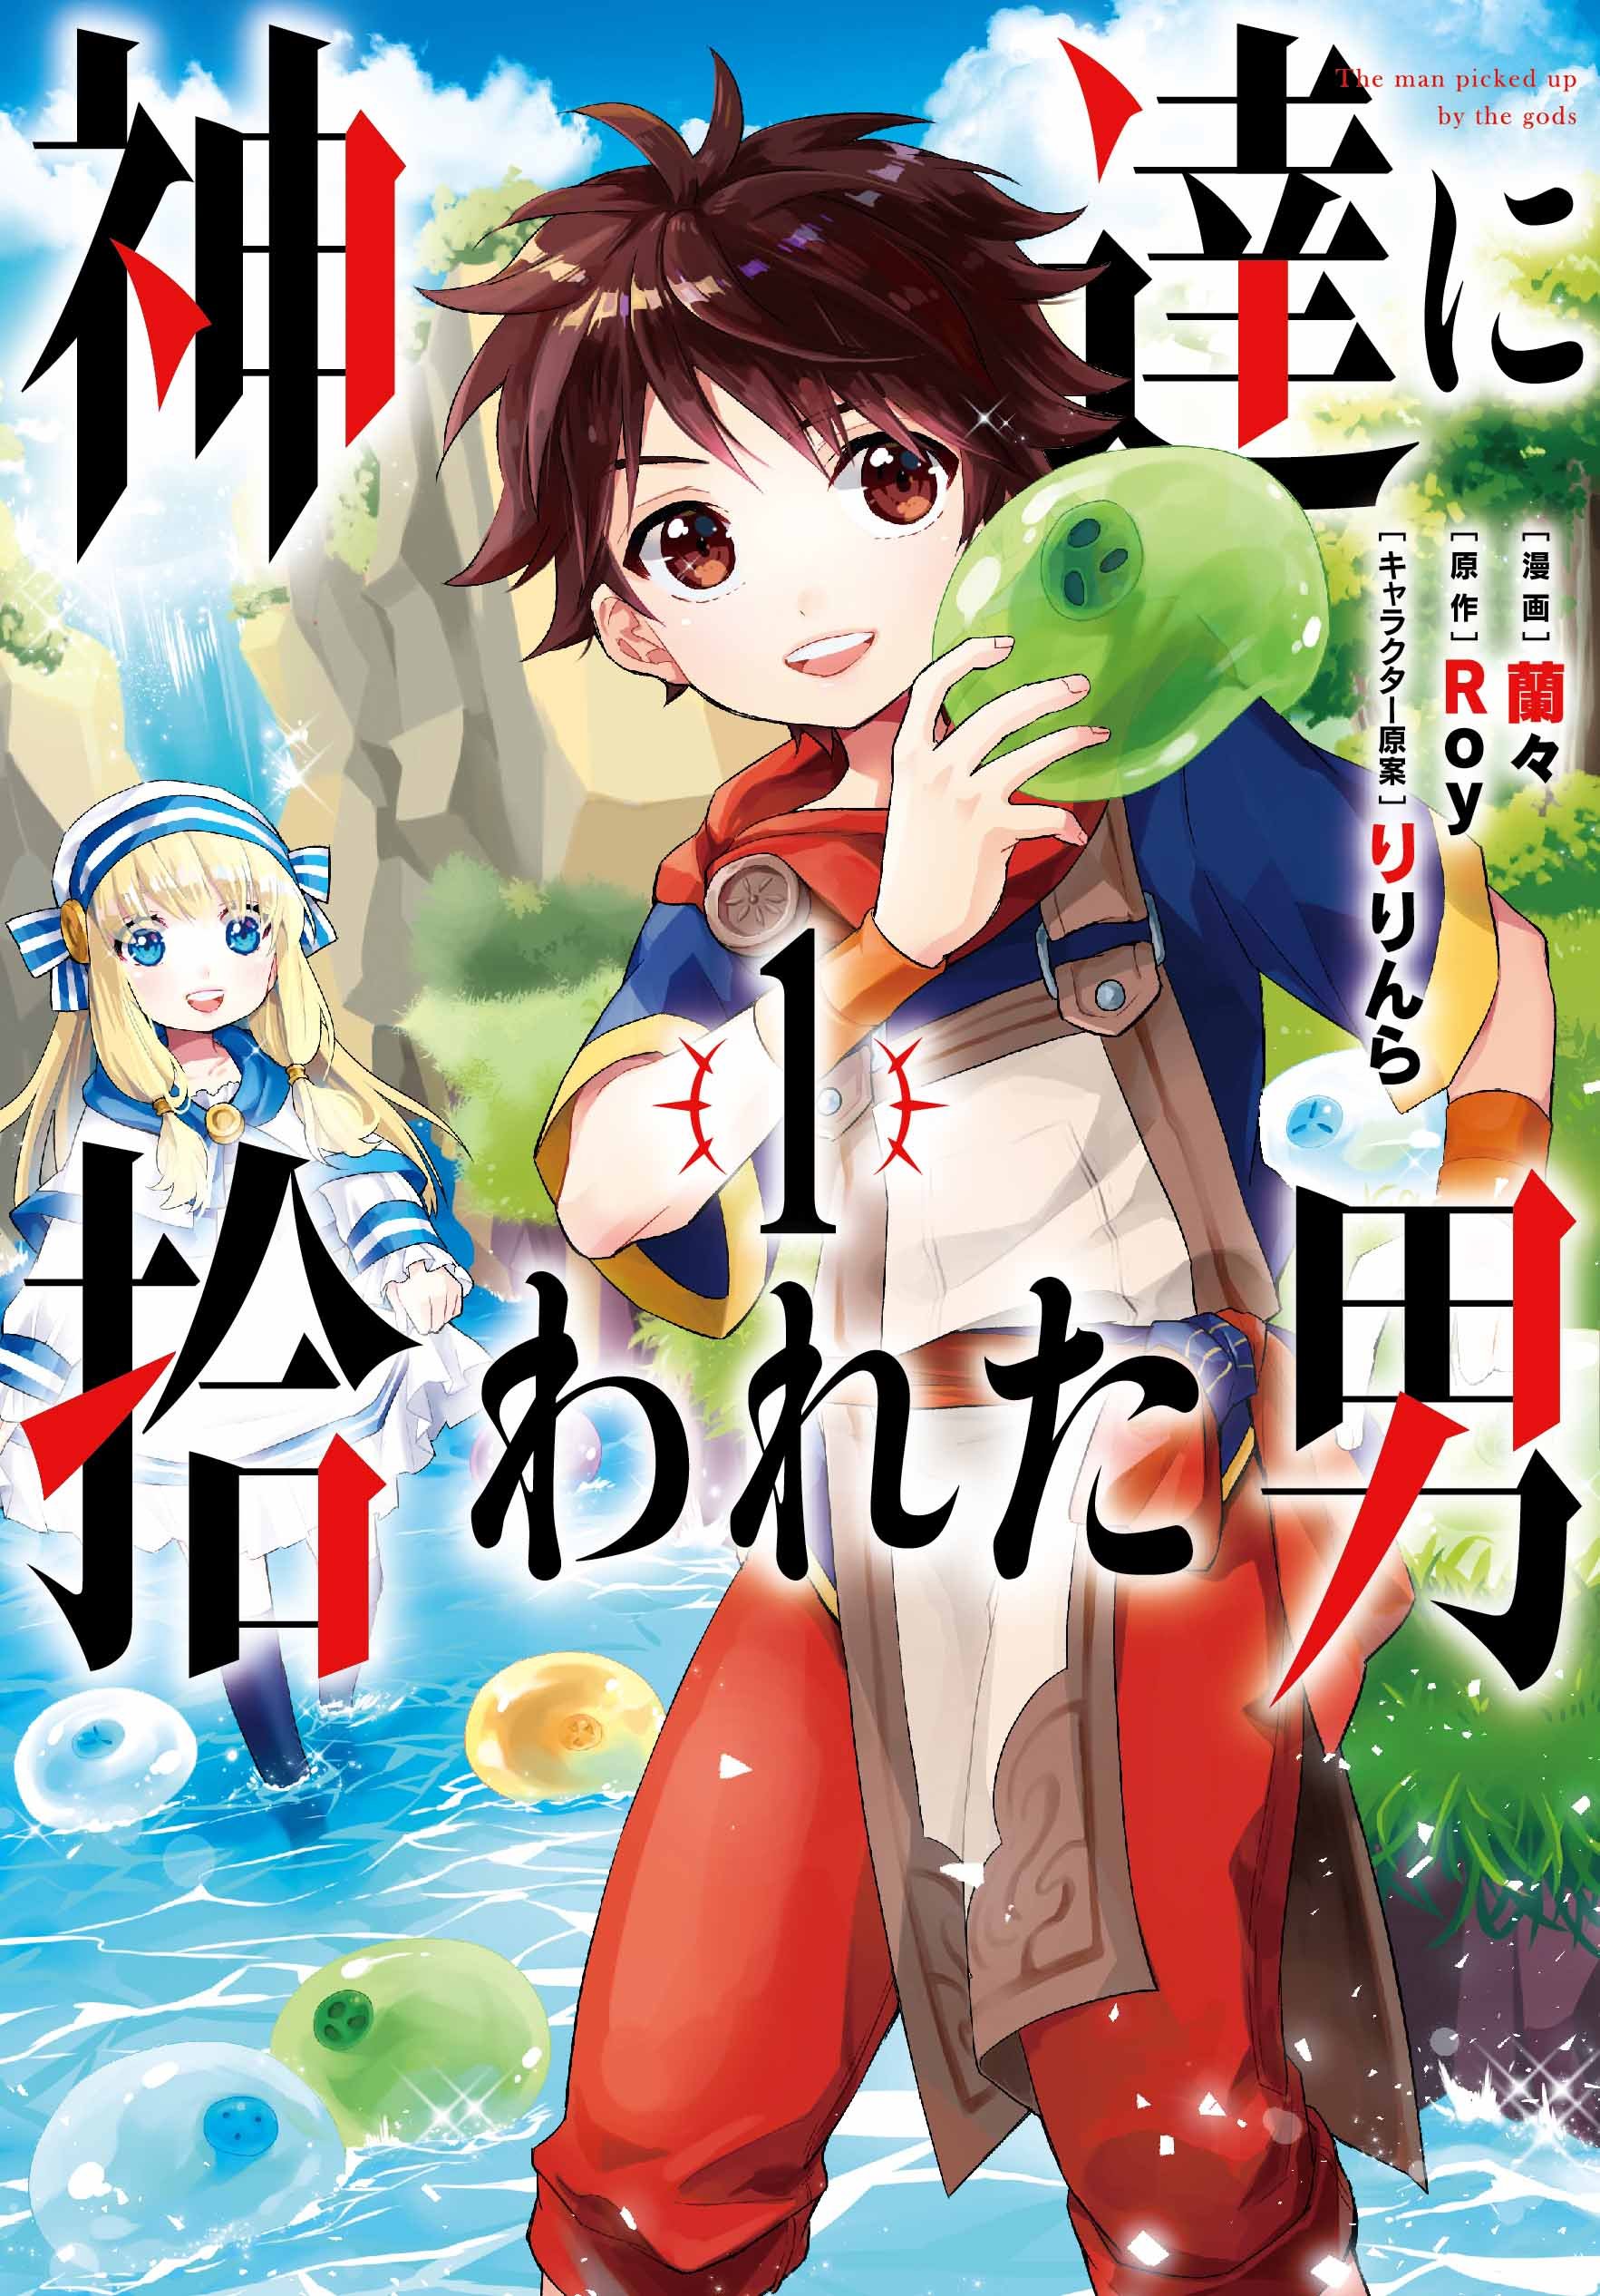 Kami-tachi ni hirowareta otoko』Main staff information lifted!: Introducing  Japanese anime!